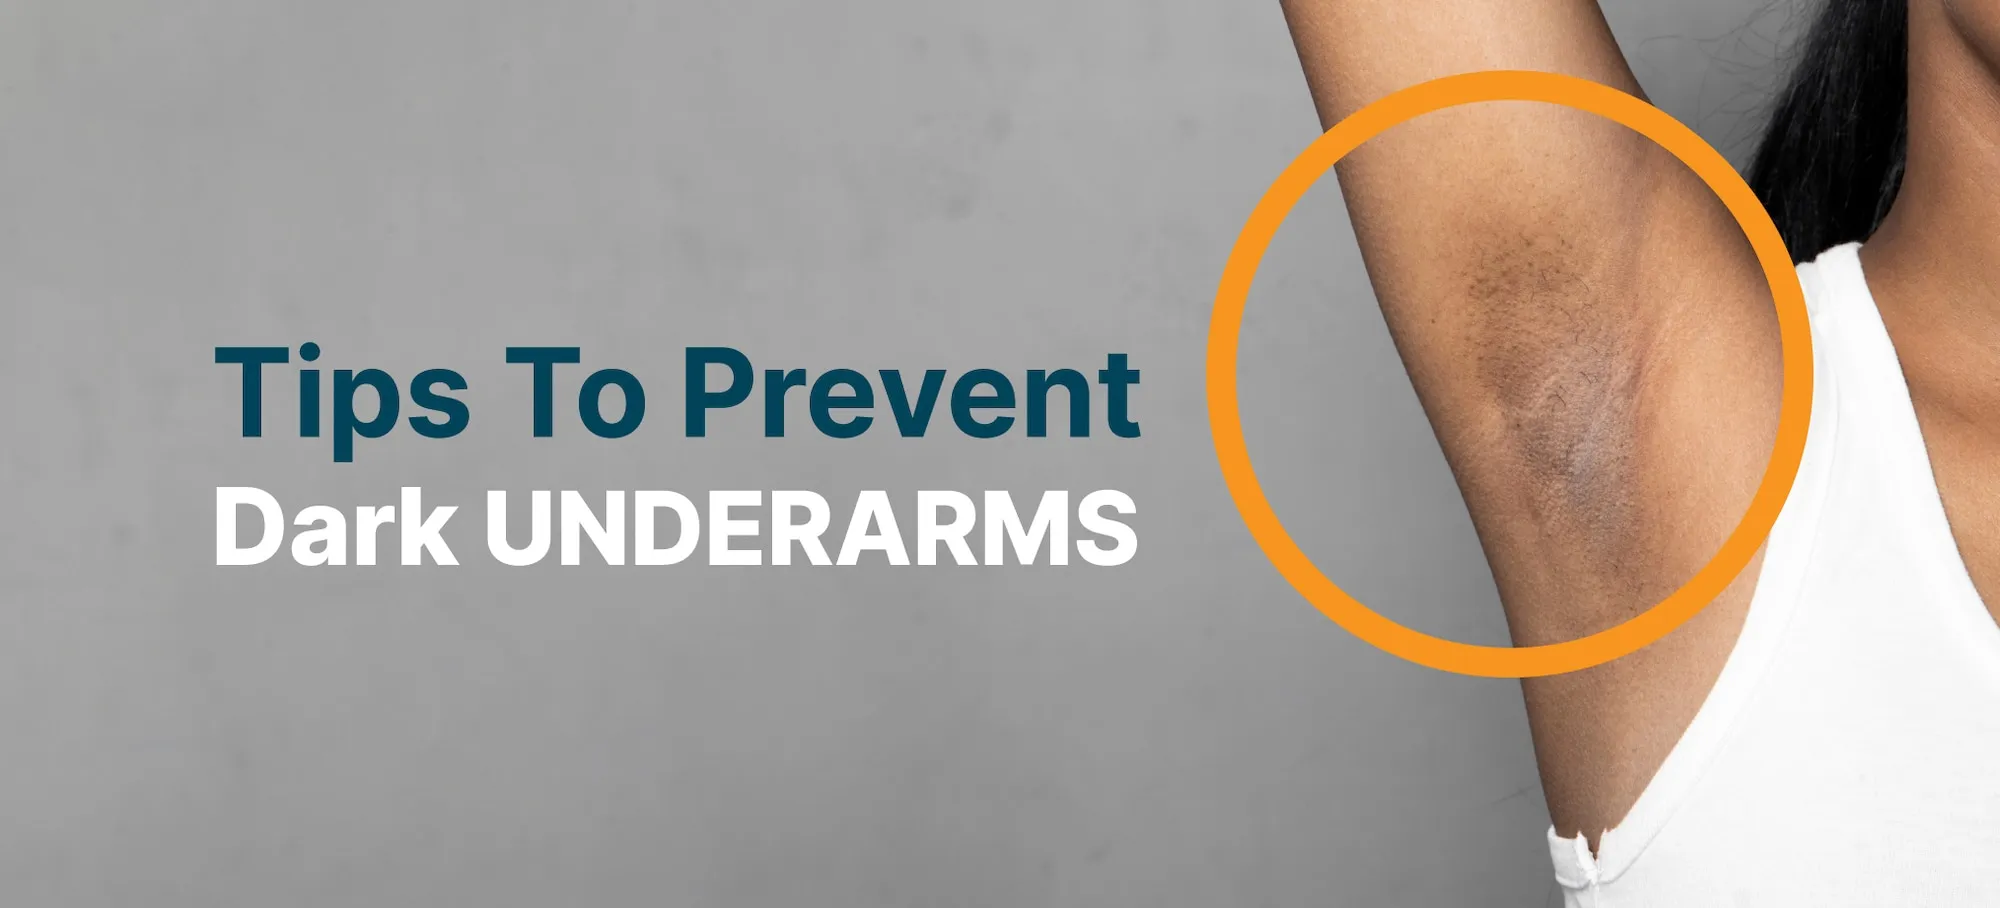 Can Your Deodorant Cause Dark Underarms?